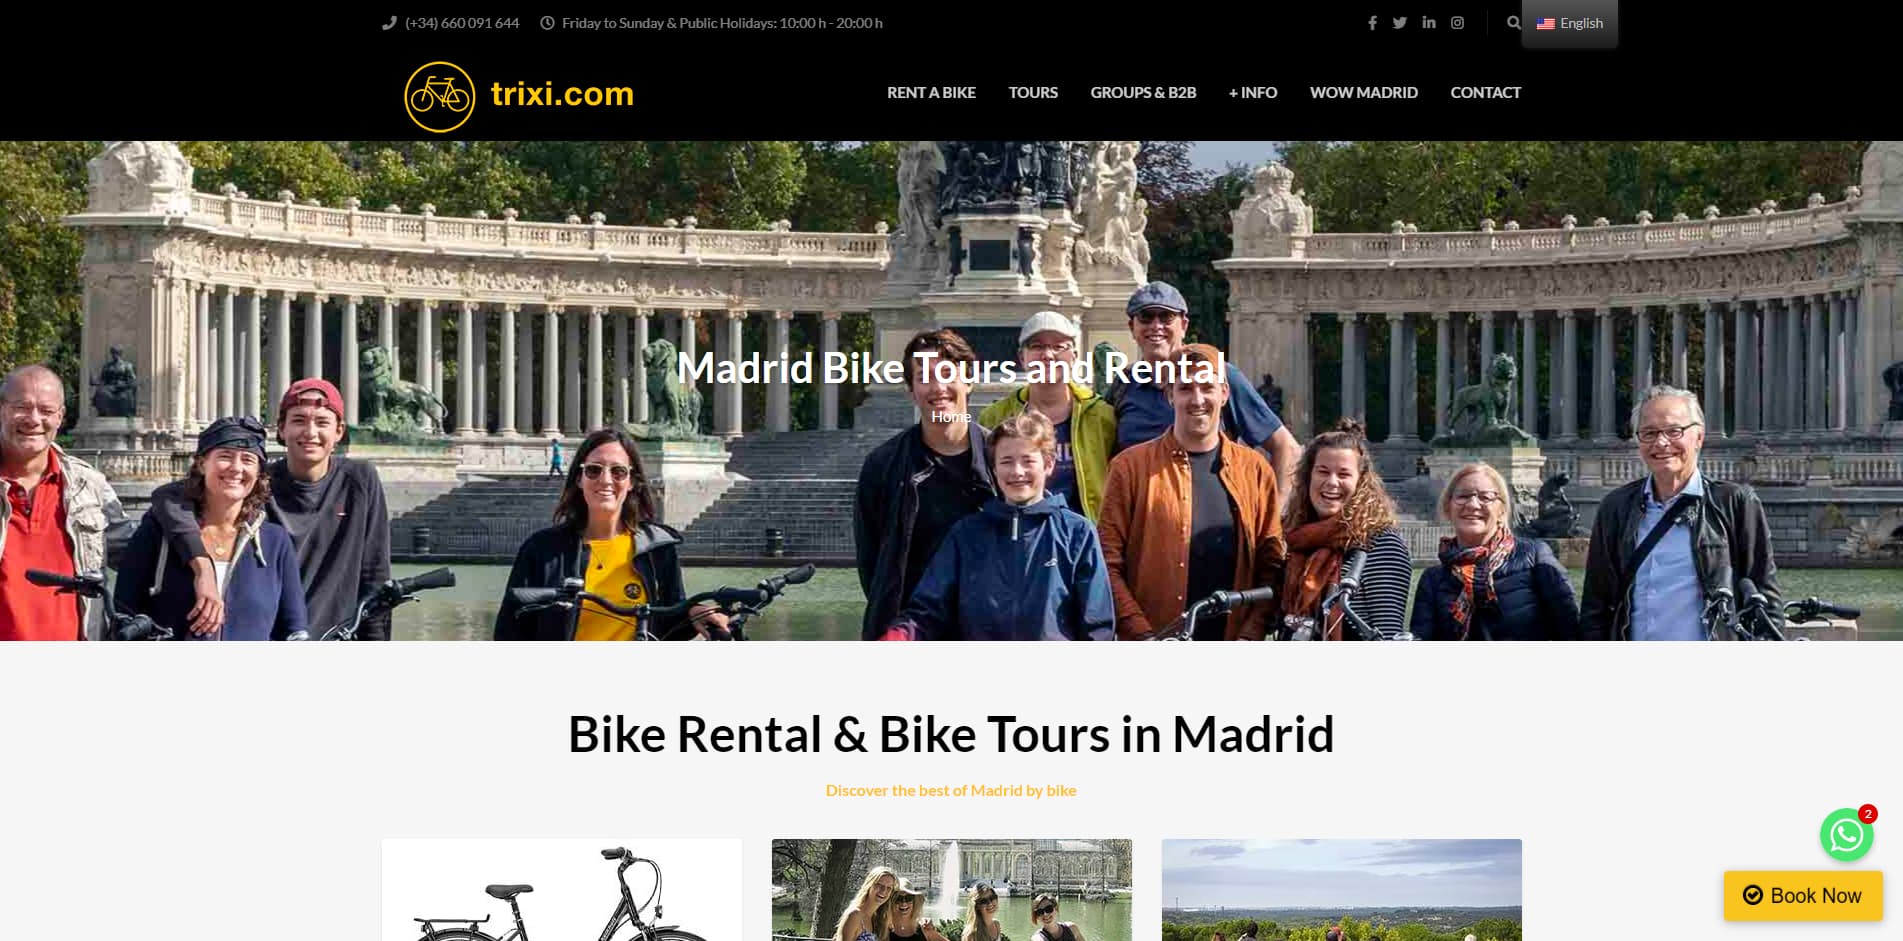 Madrid-Bike-Tours-and-Rental-Trixi-Bike-Rental-Tours